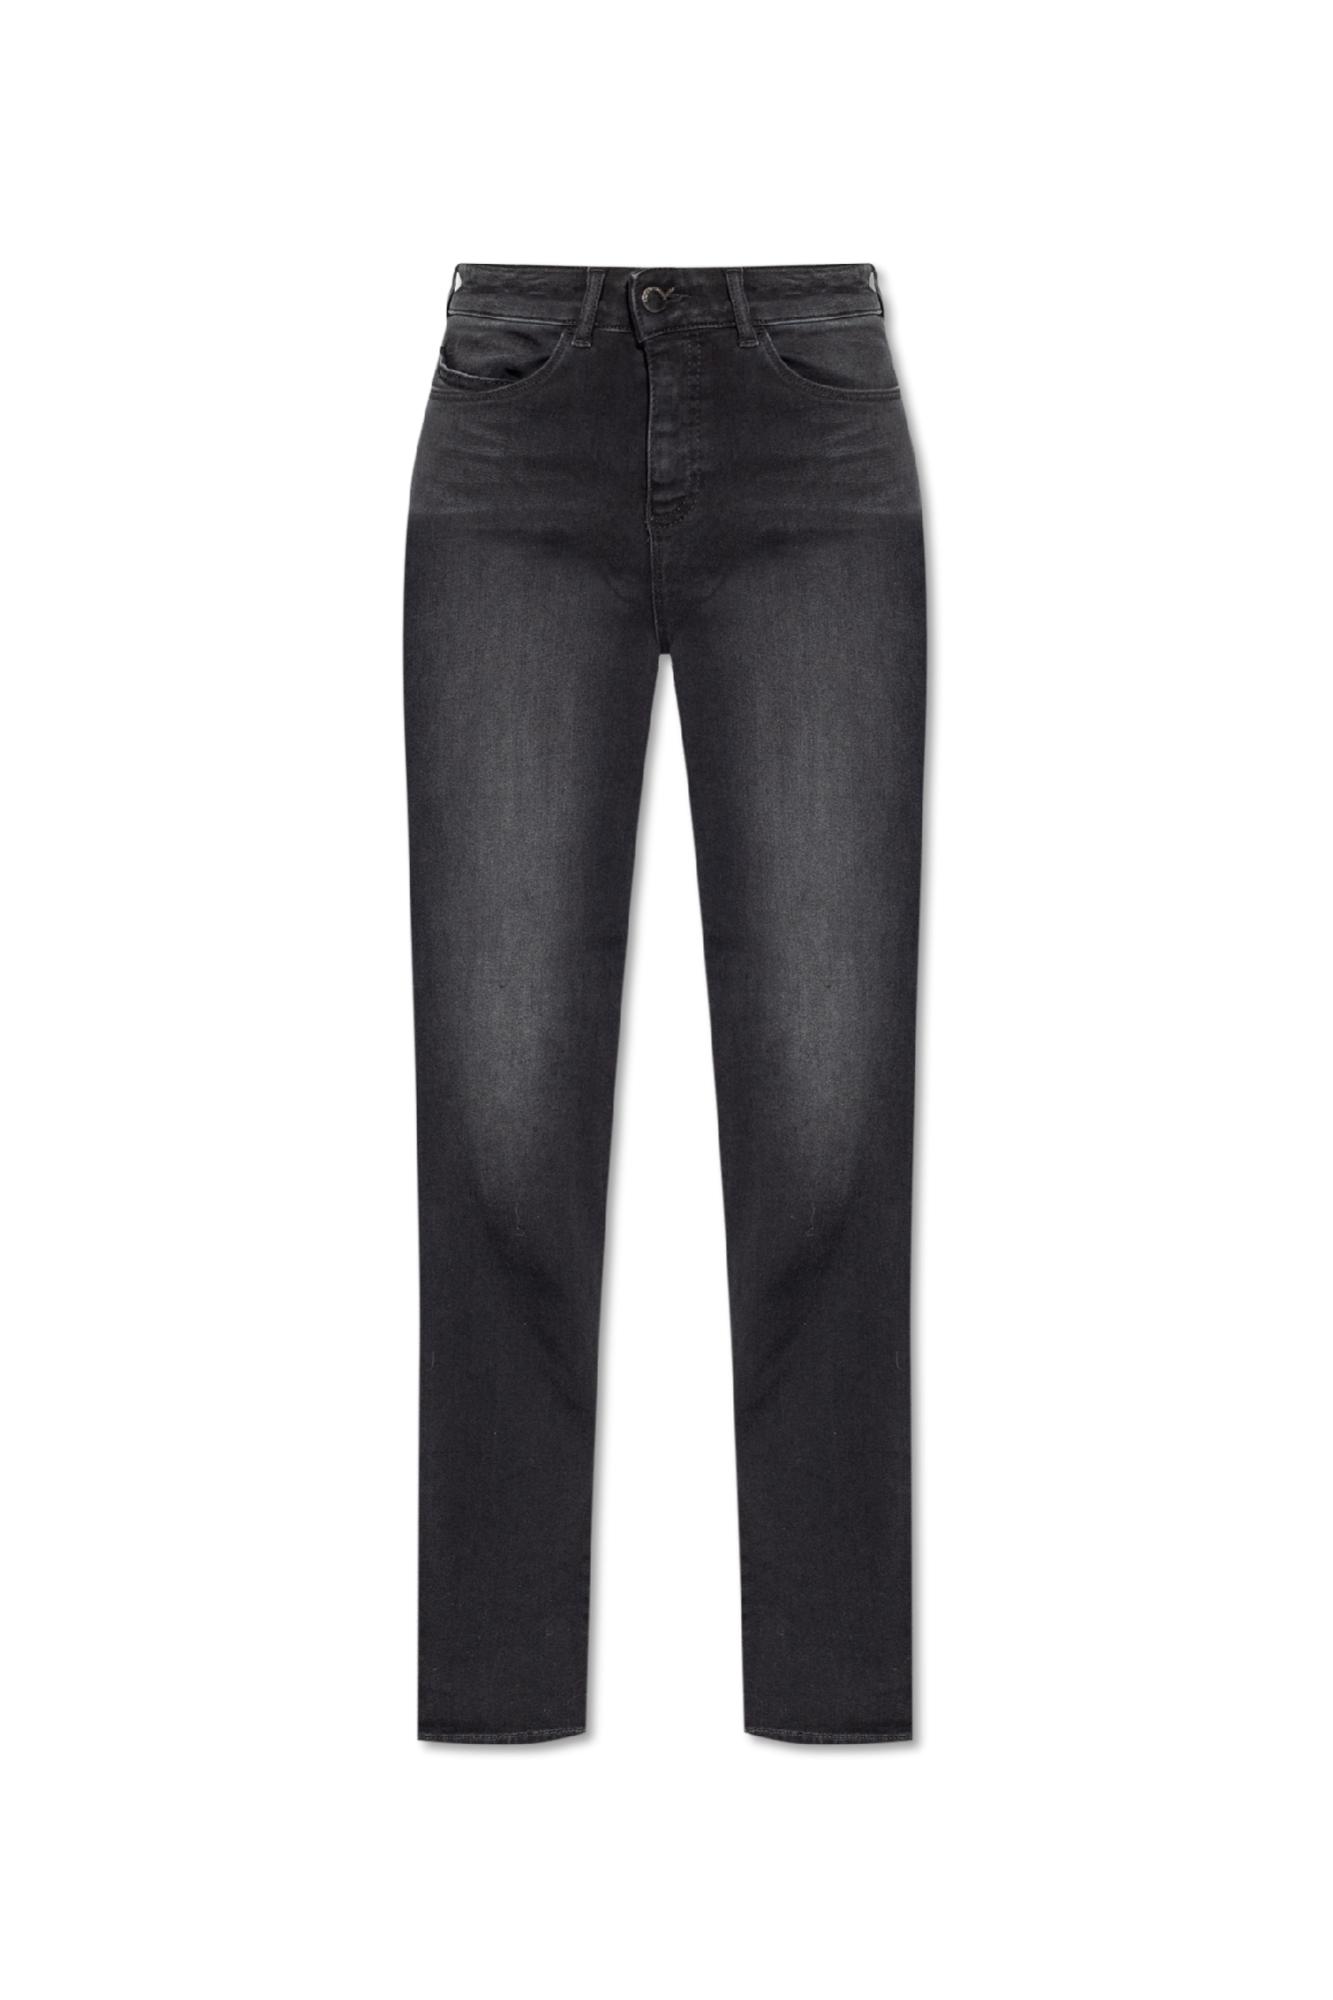 Emporio Armani 'j18' Slim Fit Jeans in Black | Lyst